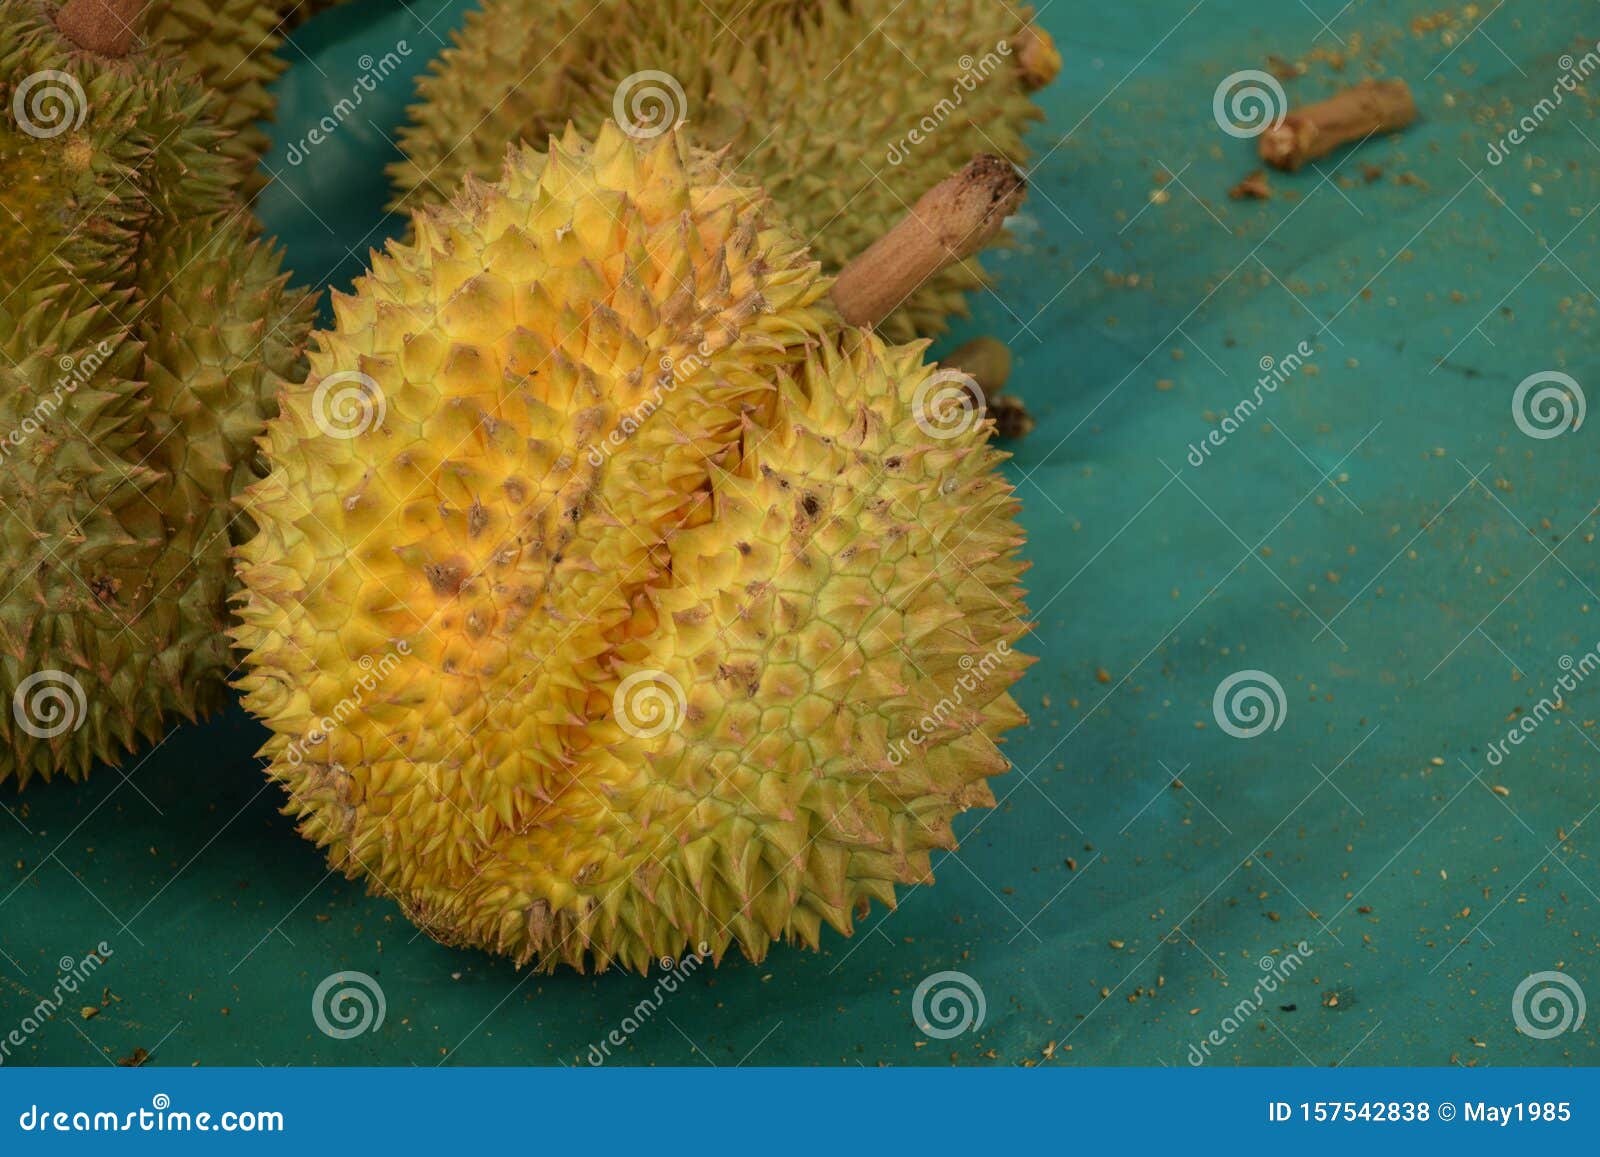 king of fruit durian tropical fruit backgroundn